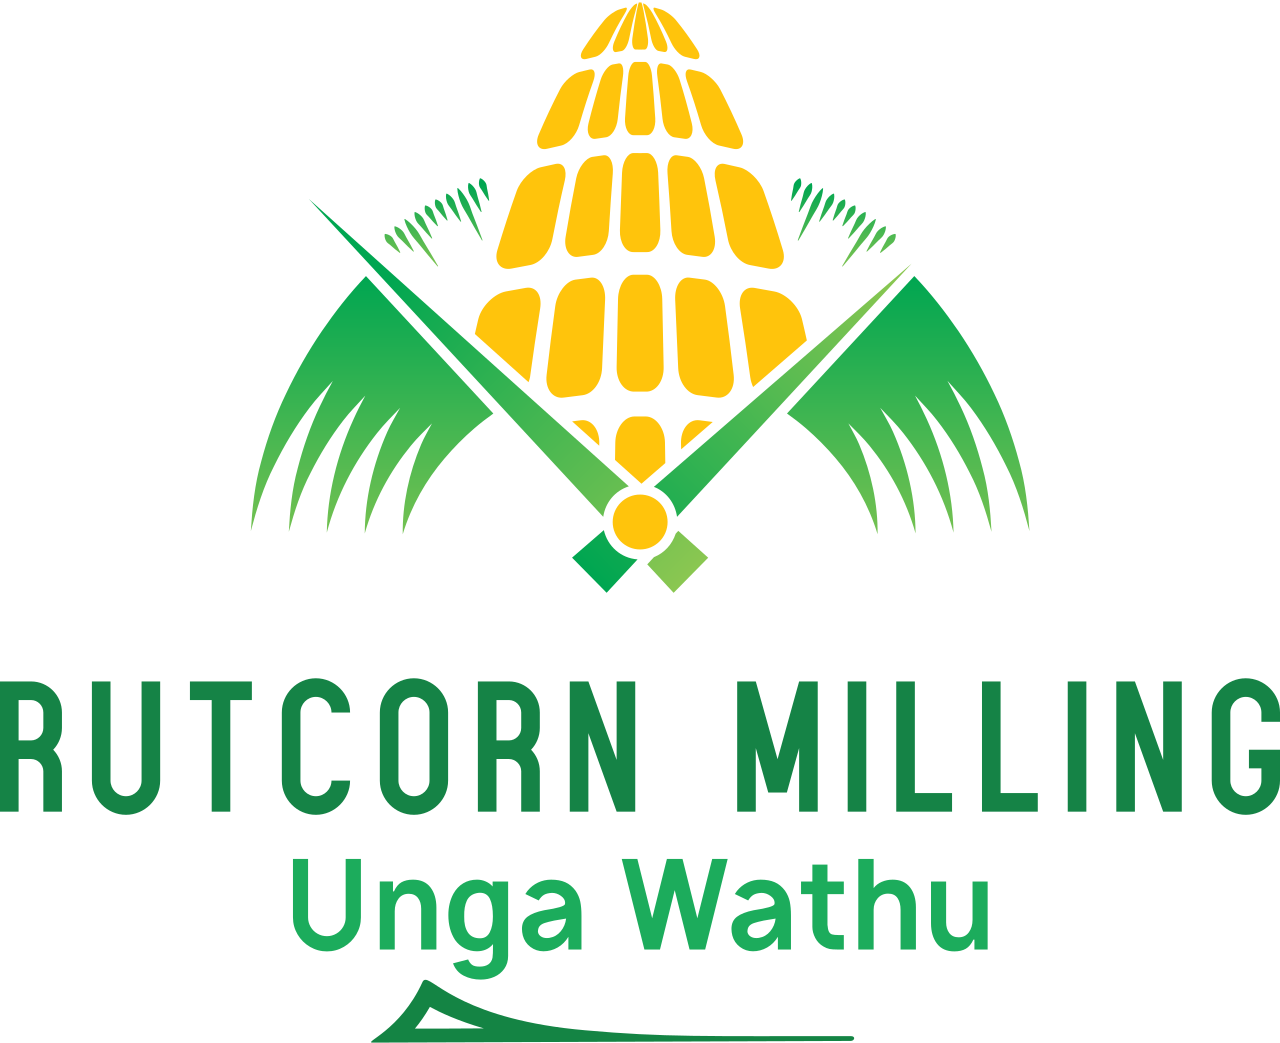 RUTCORN MILLING's logo